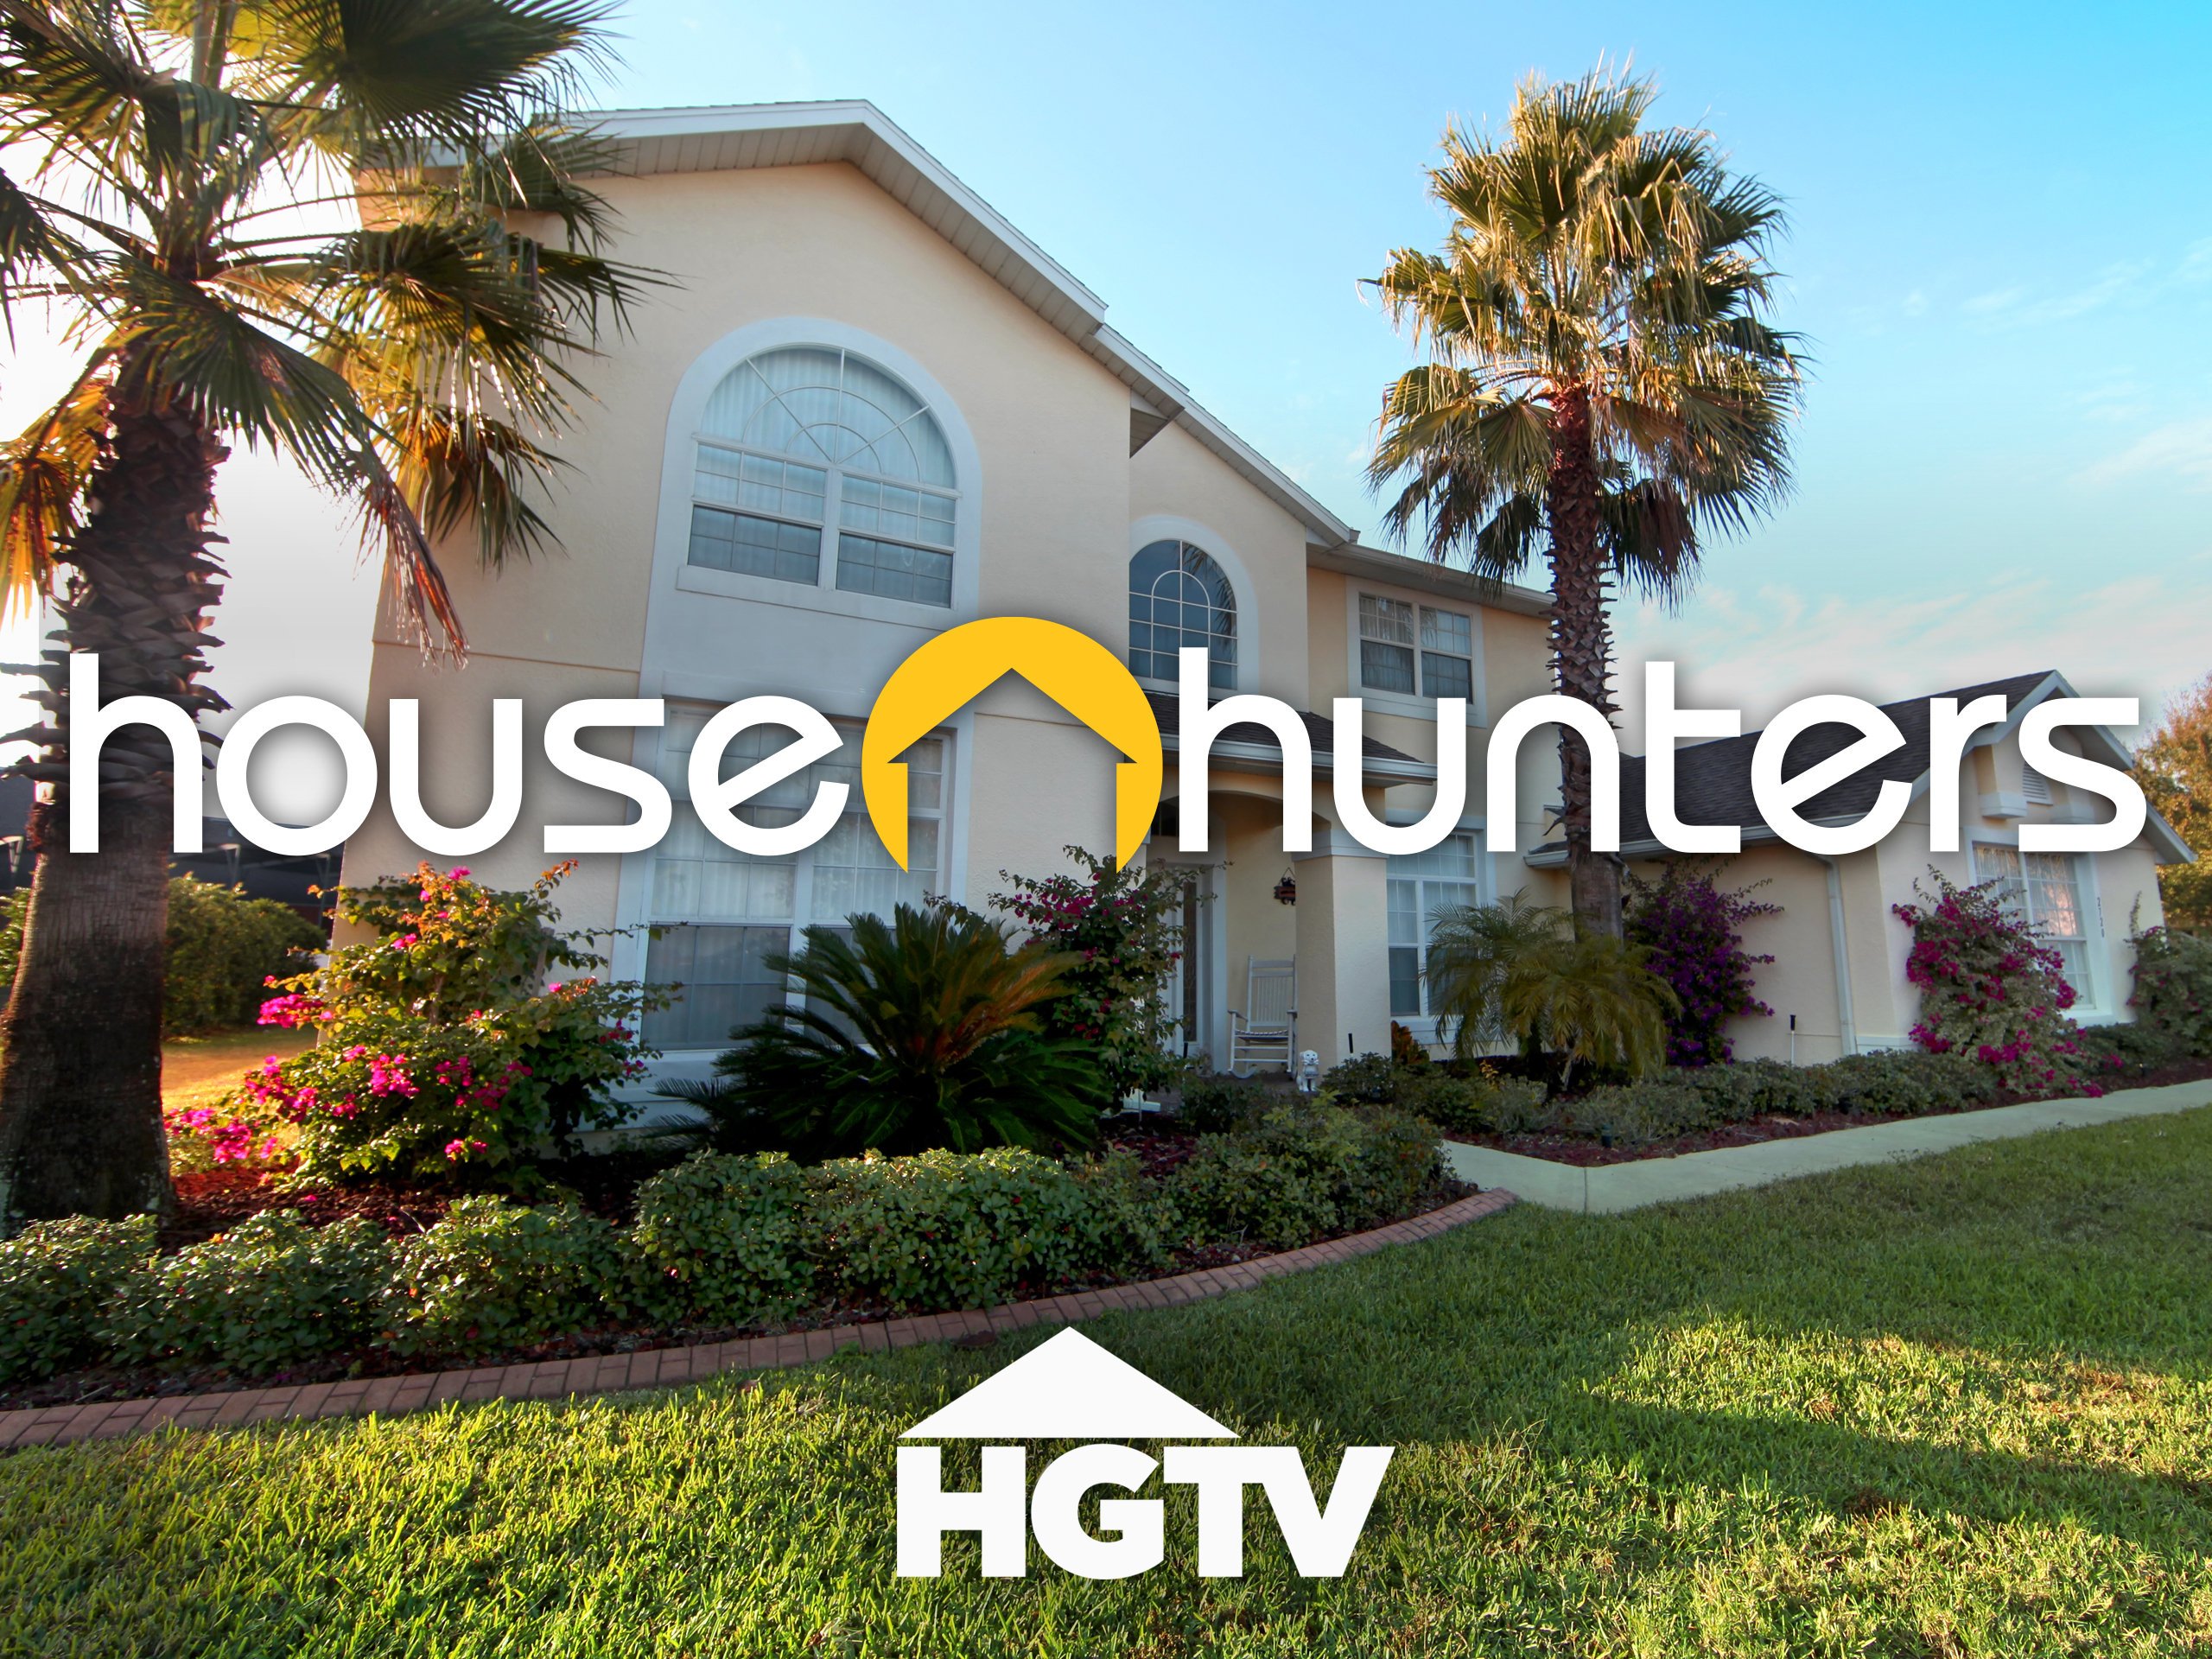 Amazon.com: House Hunters Season 75: Amazon Digital Services LLC